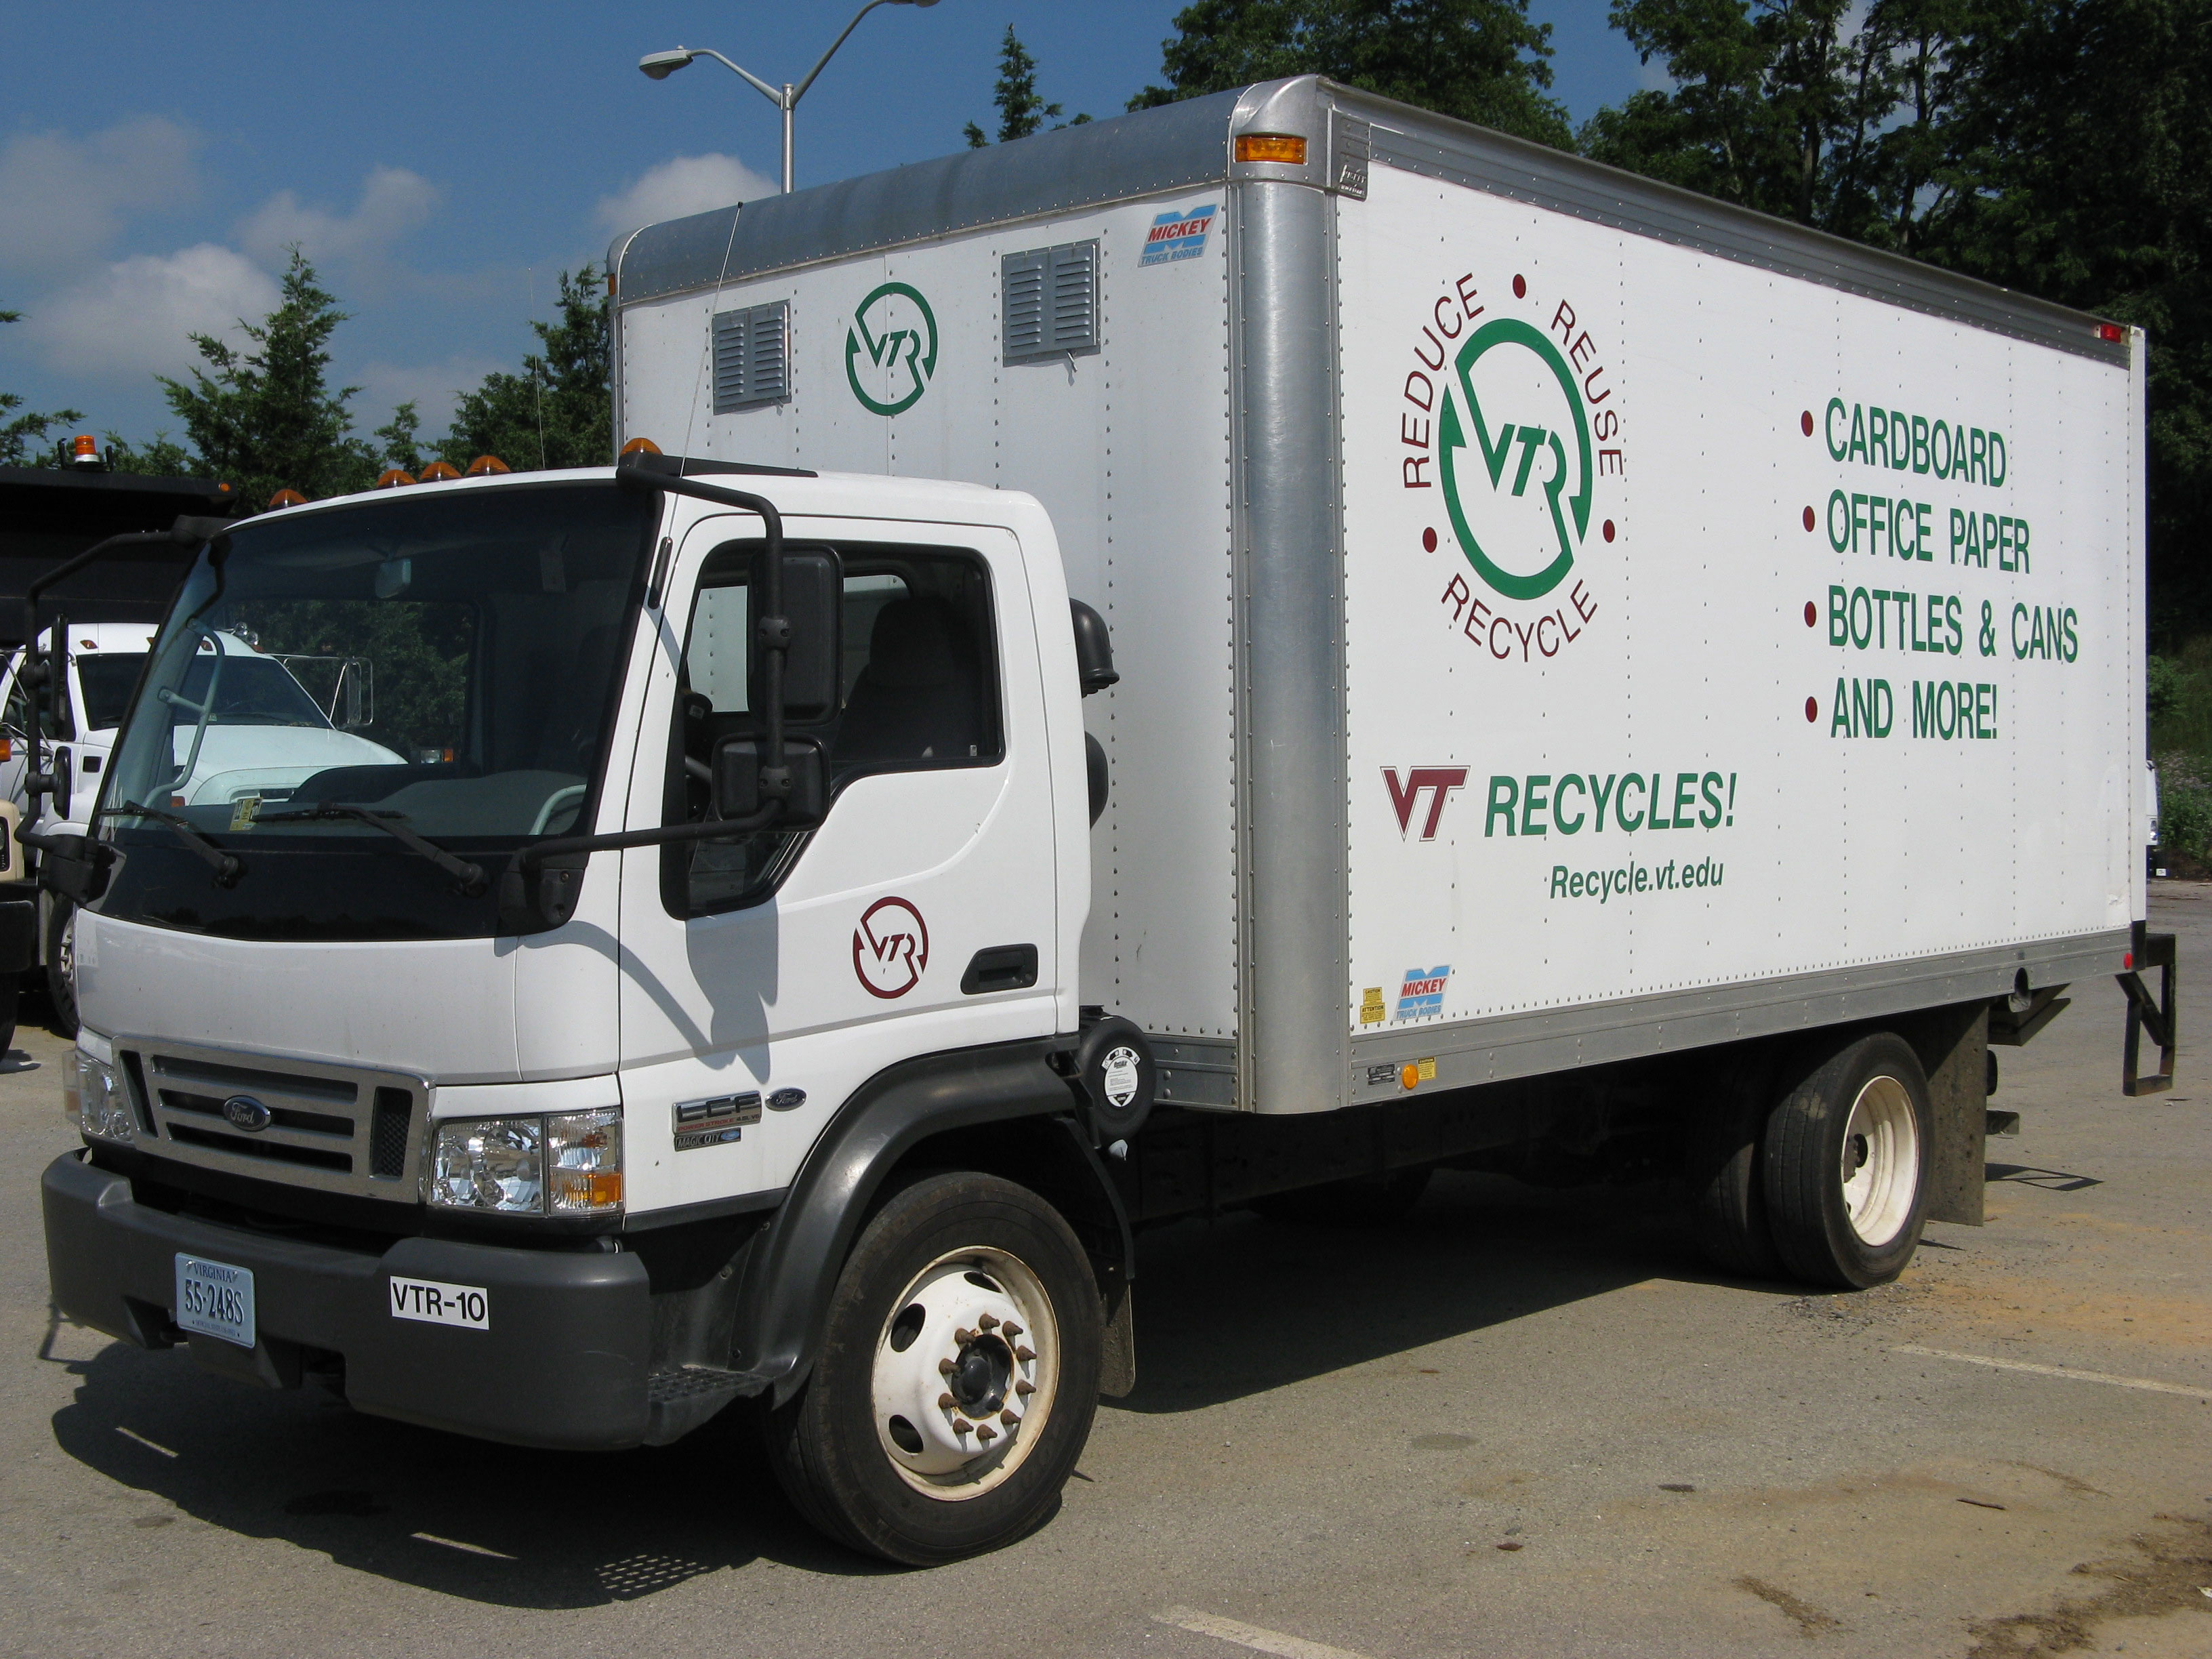 A Virginia Tech recycling truck